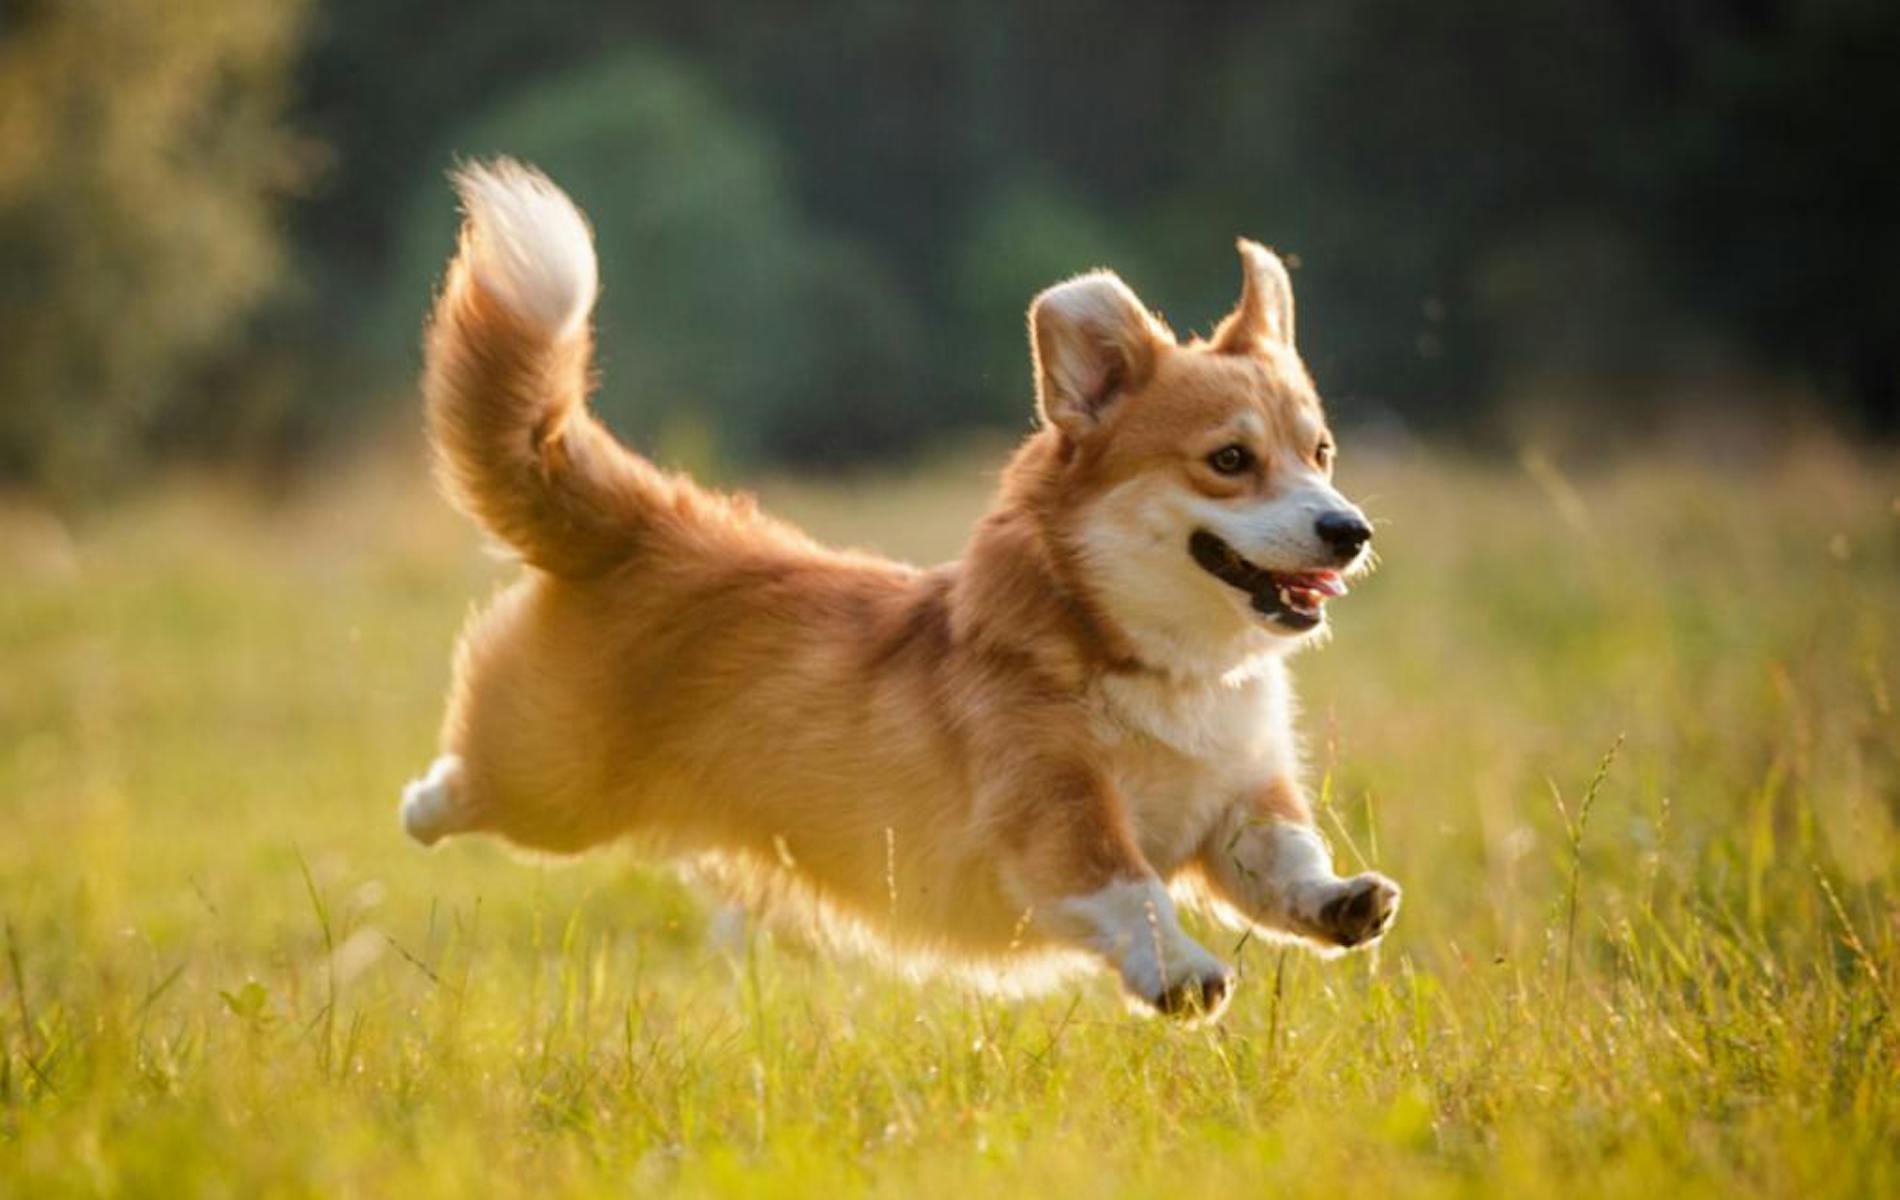 Dog running happily through field